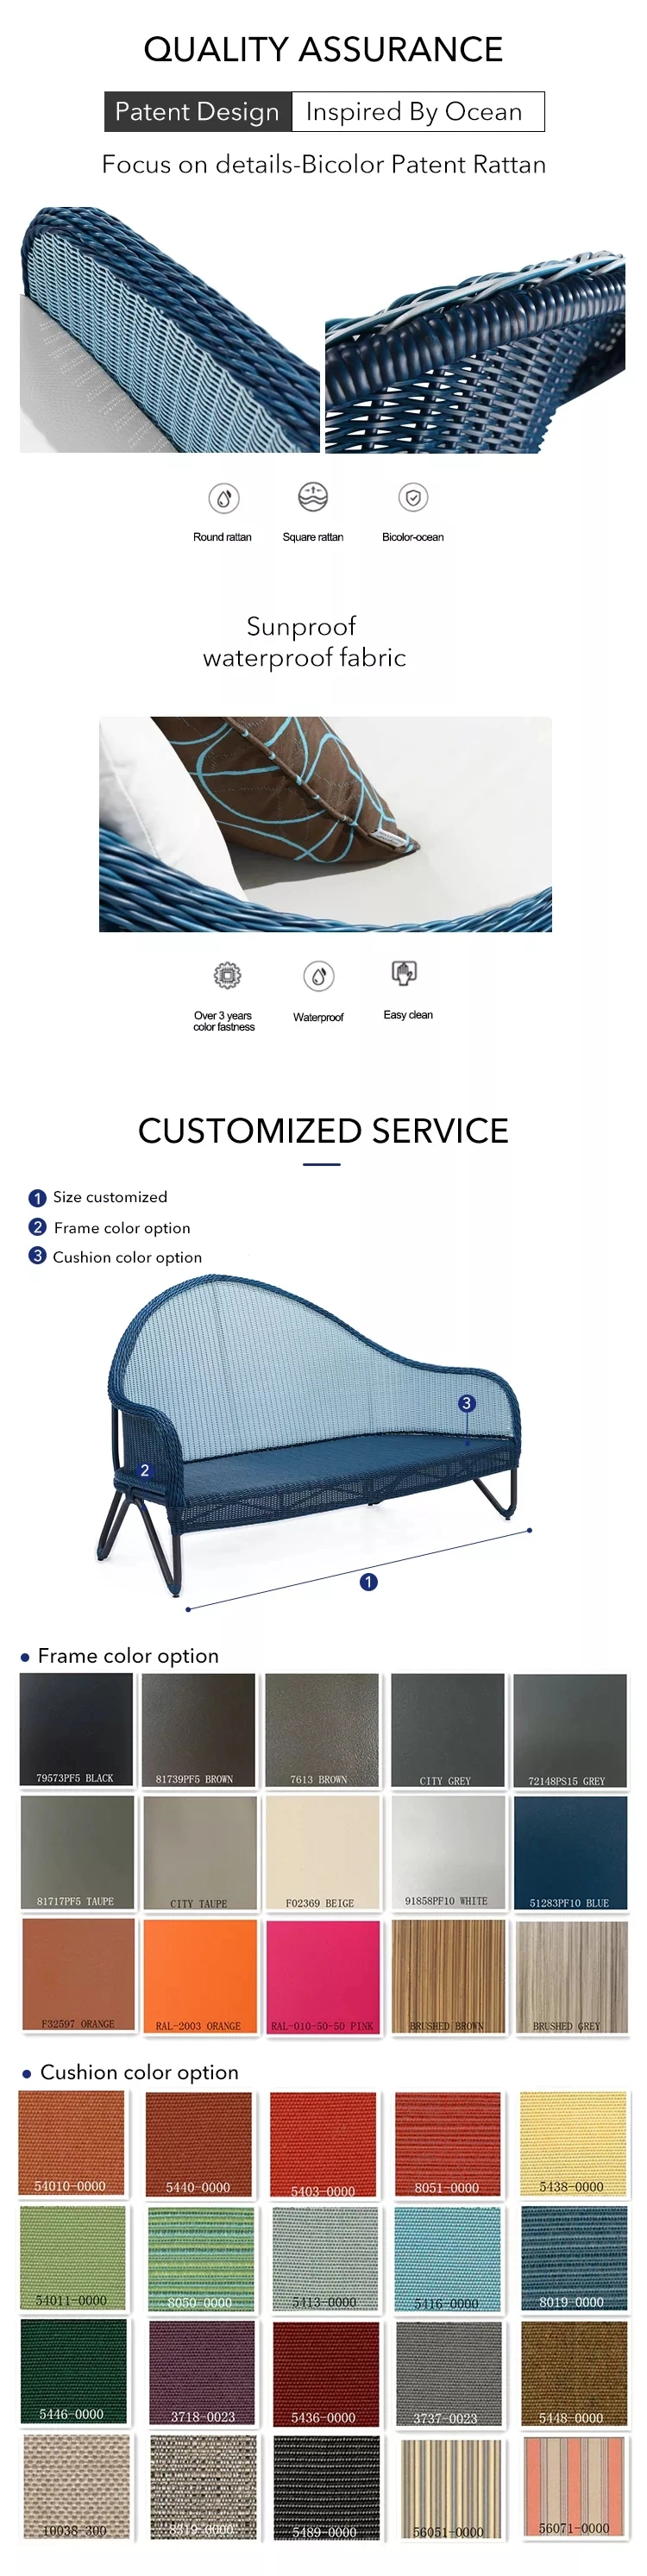 New Design Aluminium Wicker Leisure Outdoor Furniture Tent Ocean Mediterranean Luxury Modern Style Sectional Sofa